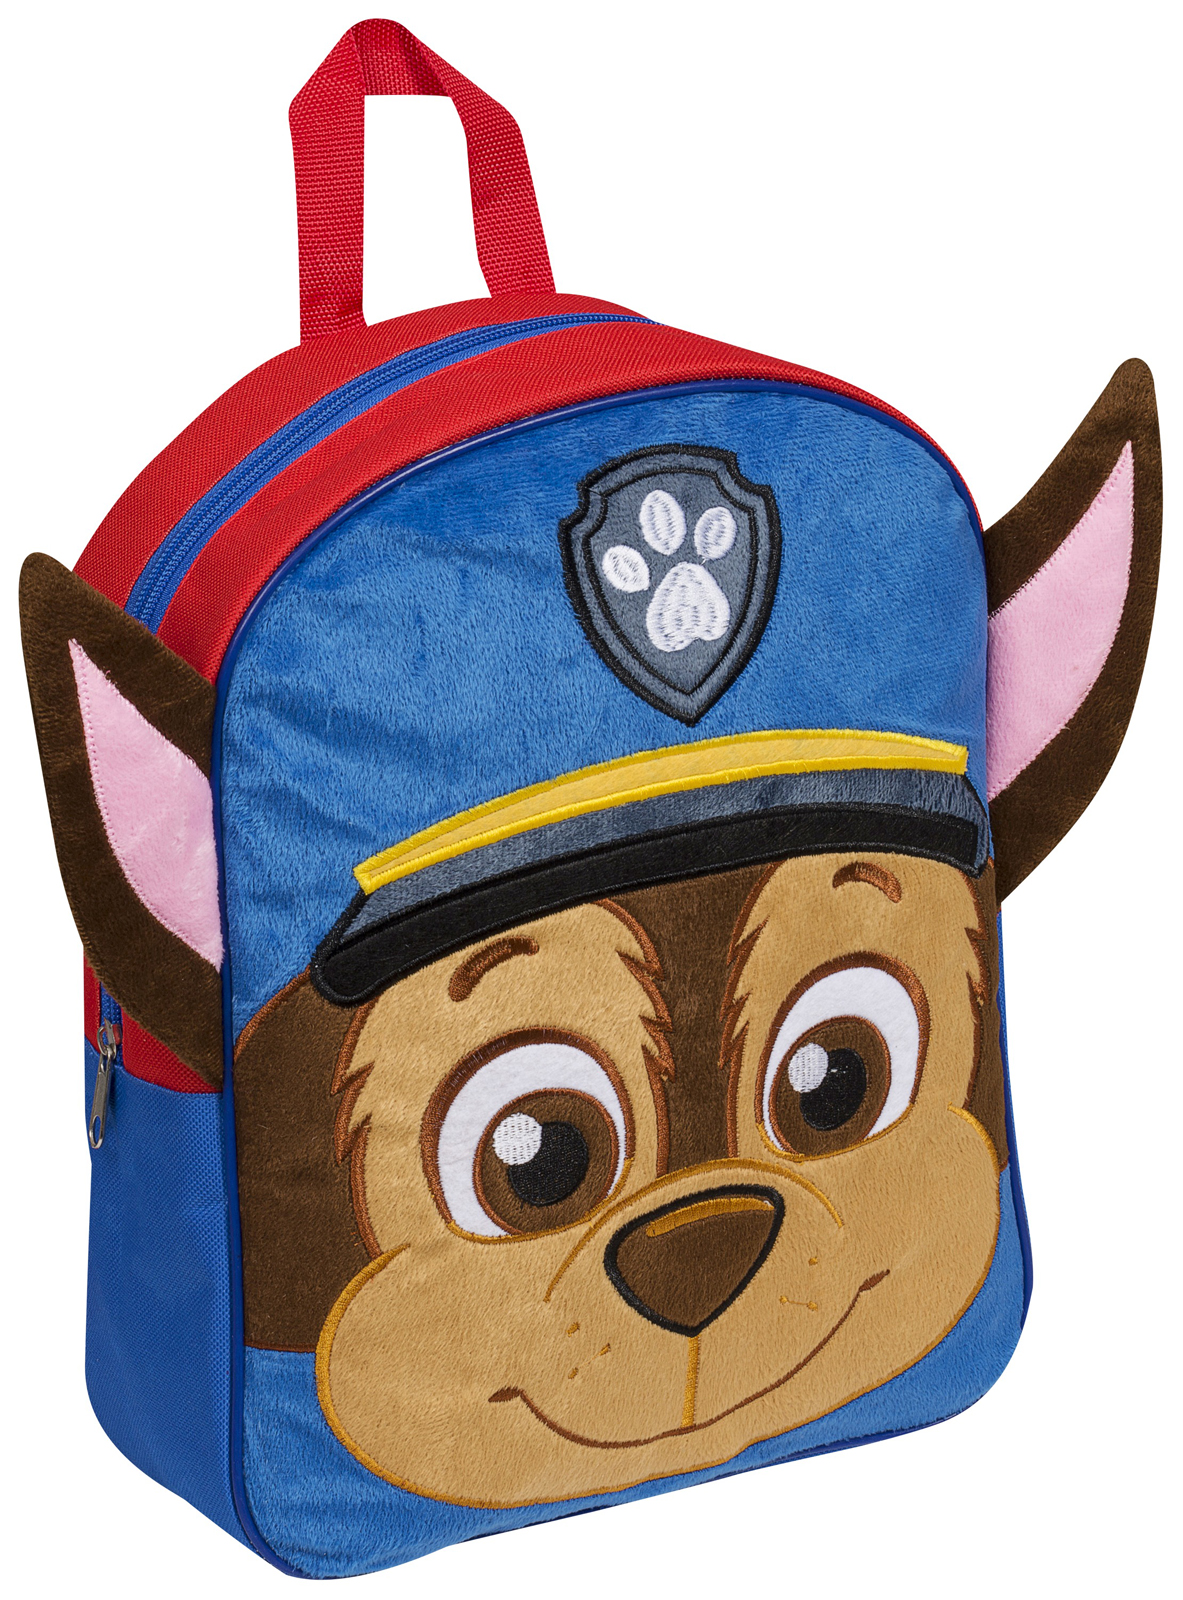 Bookbag clipart responsibility. Kids plush character backpack